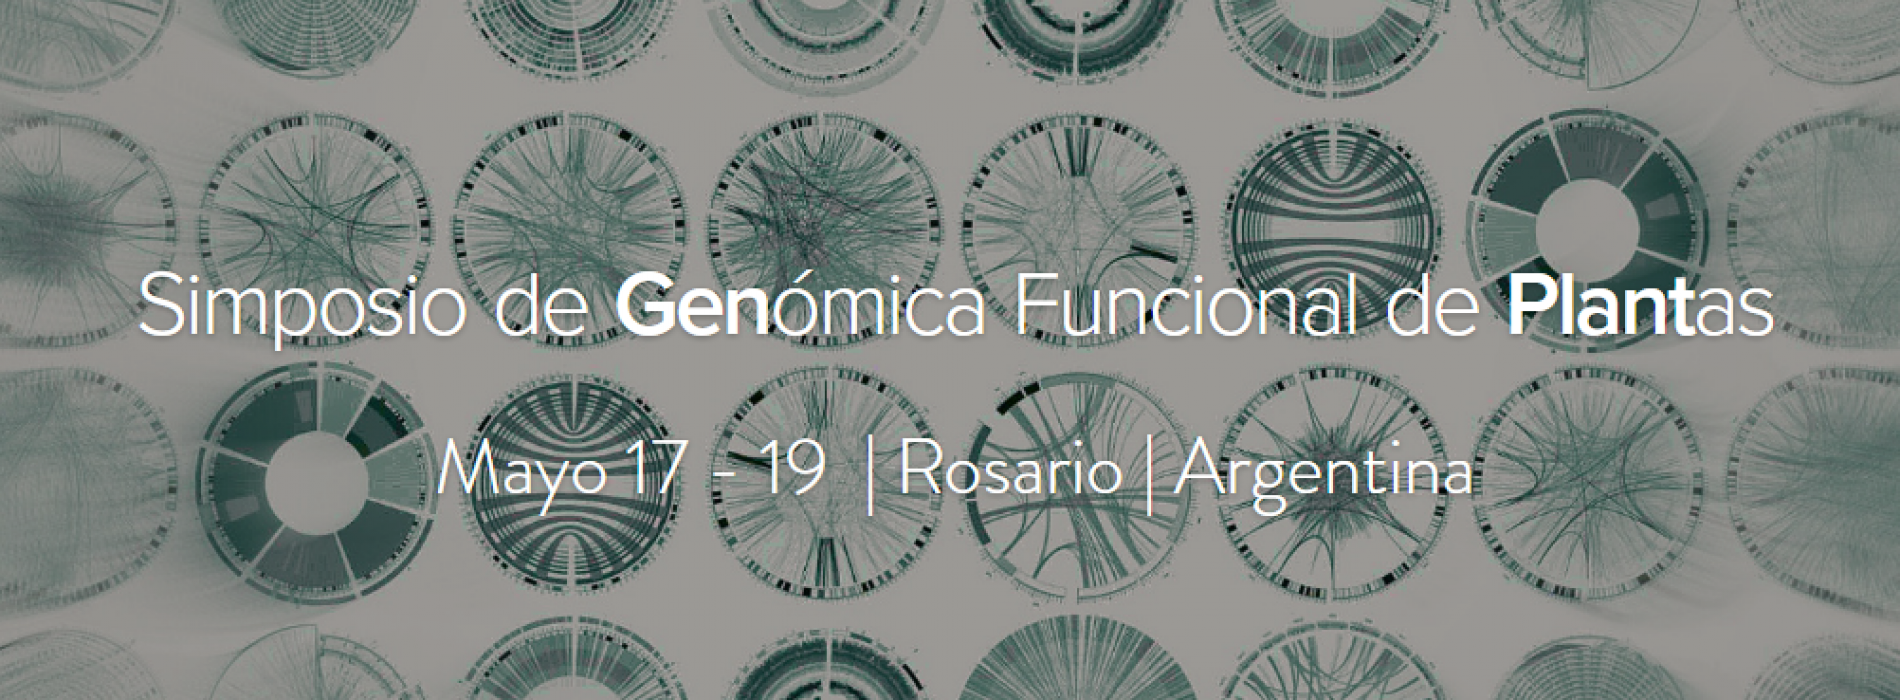 Symposium on functional genomics of plants